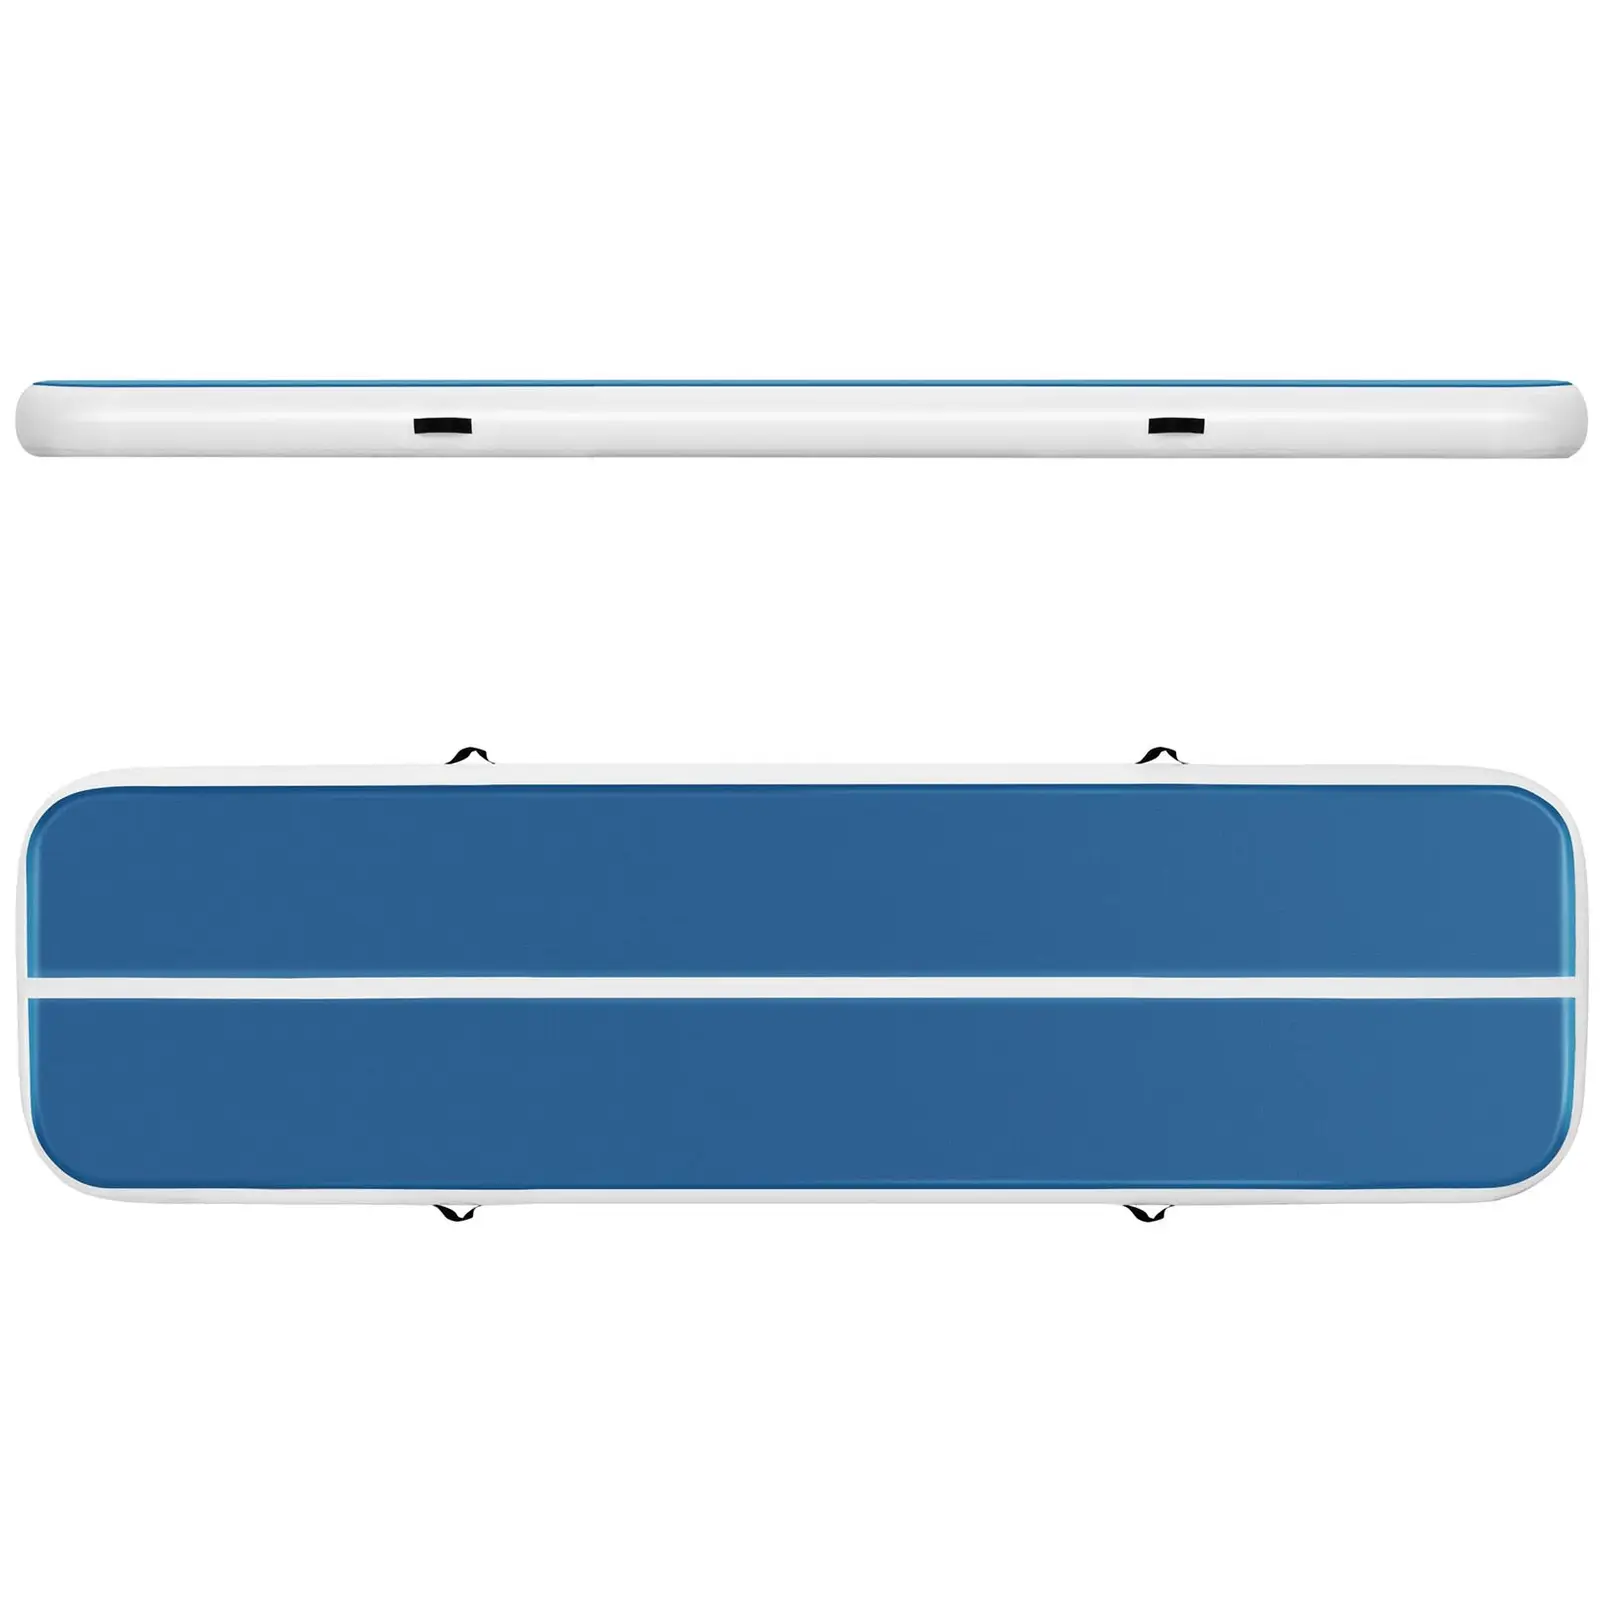 Conjunto Tapete de ginástica inflável - 400 x 100 x 20 cm - azul-branco + Bomba de ar elétrica